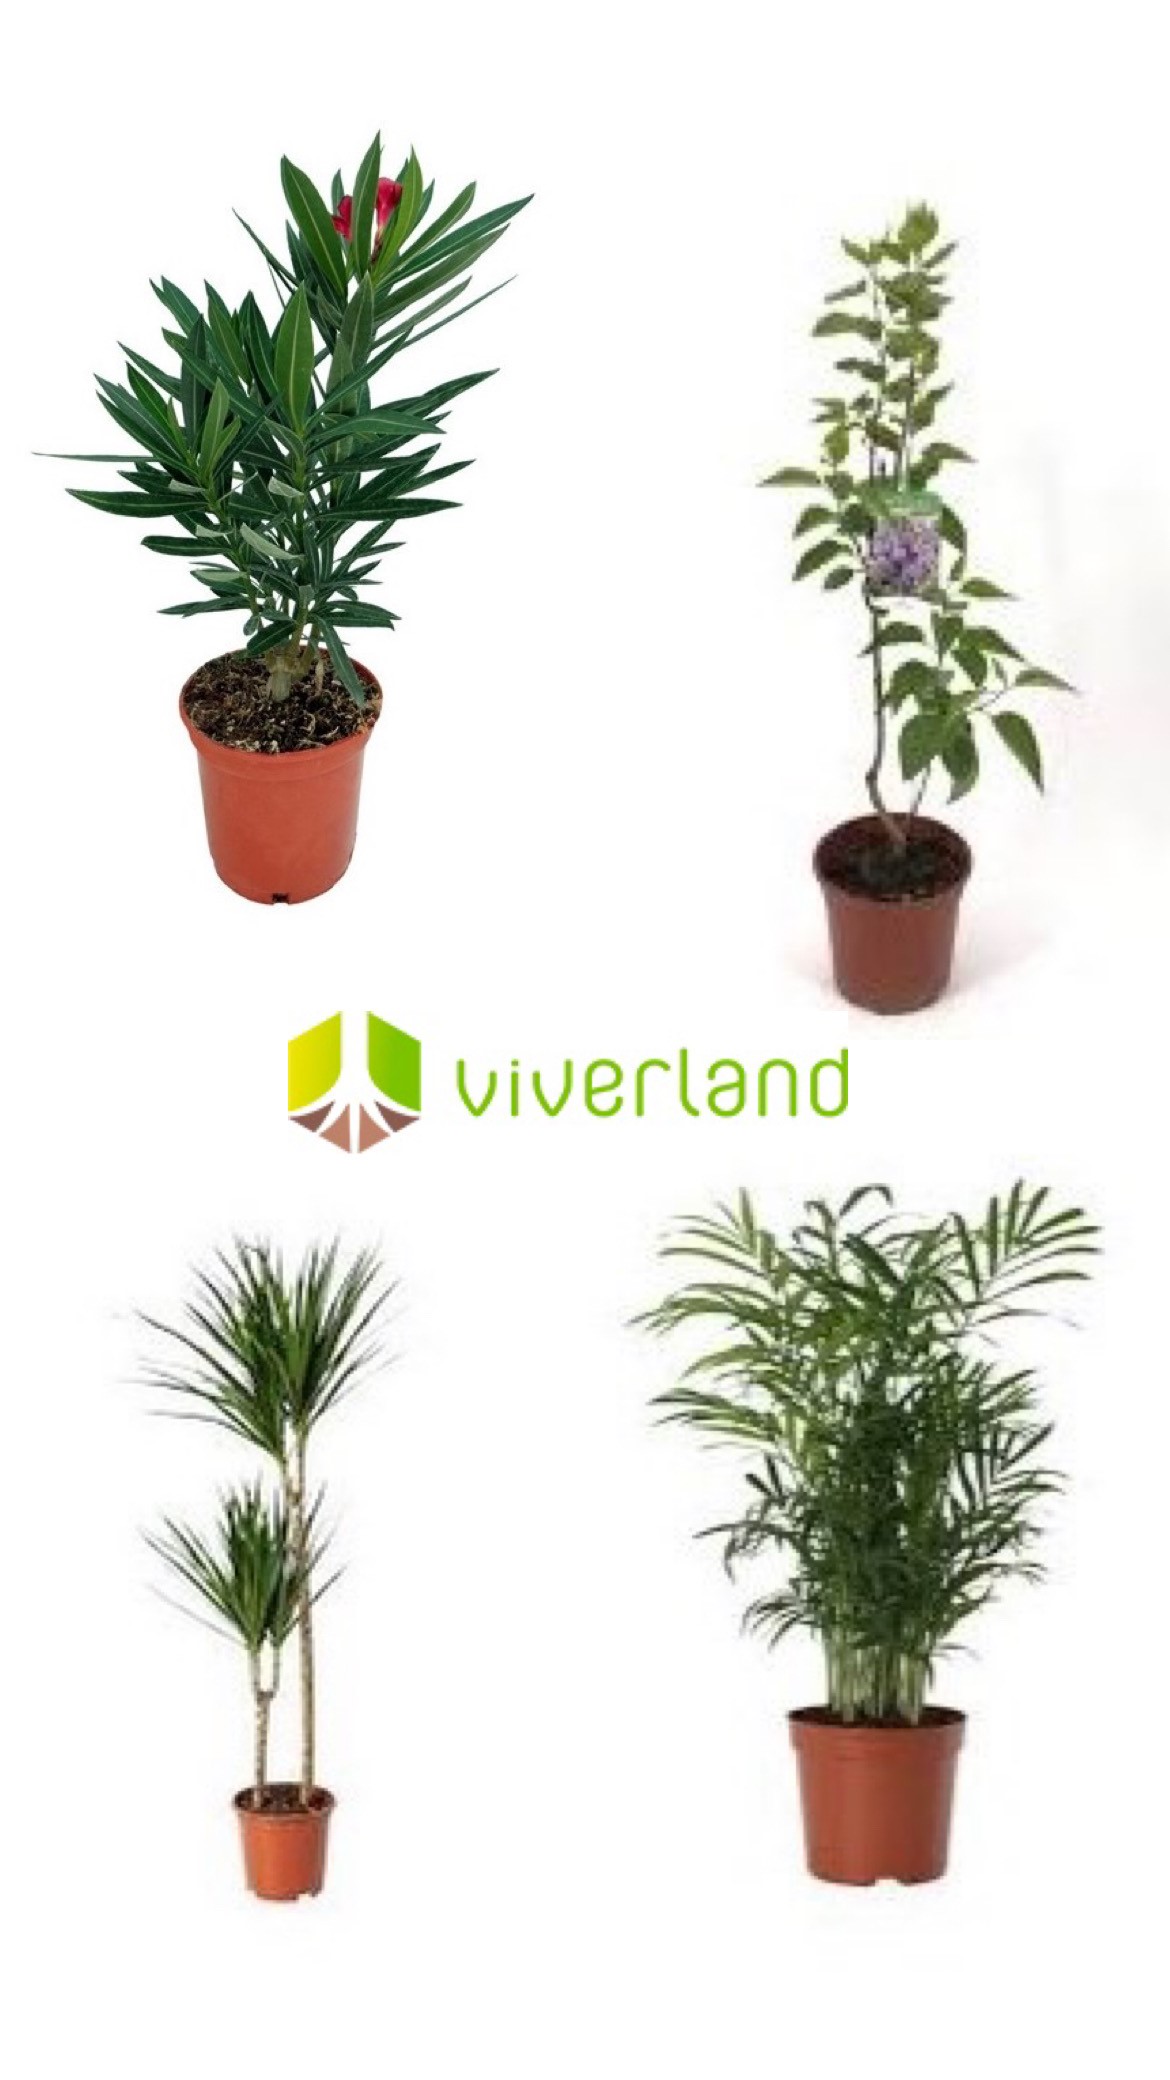 Plantas-viverland